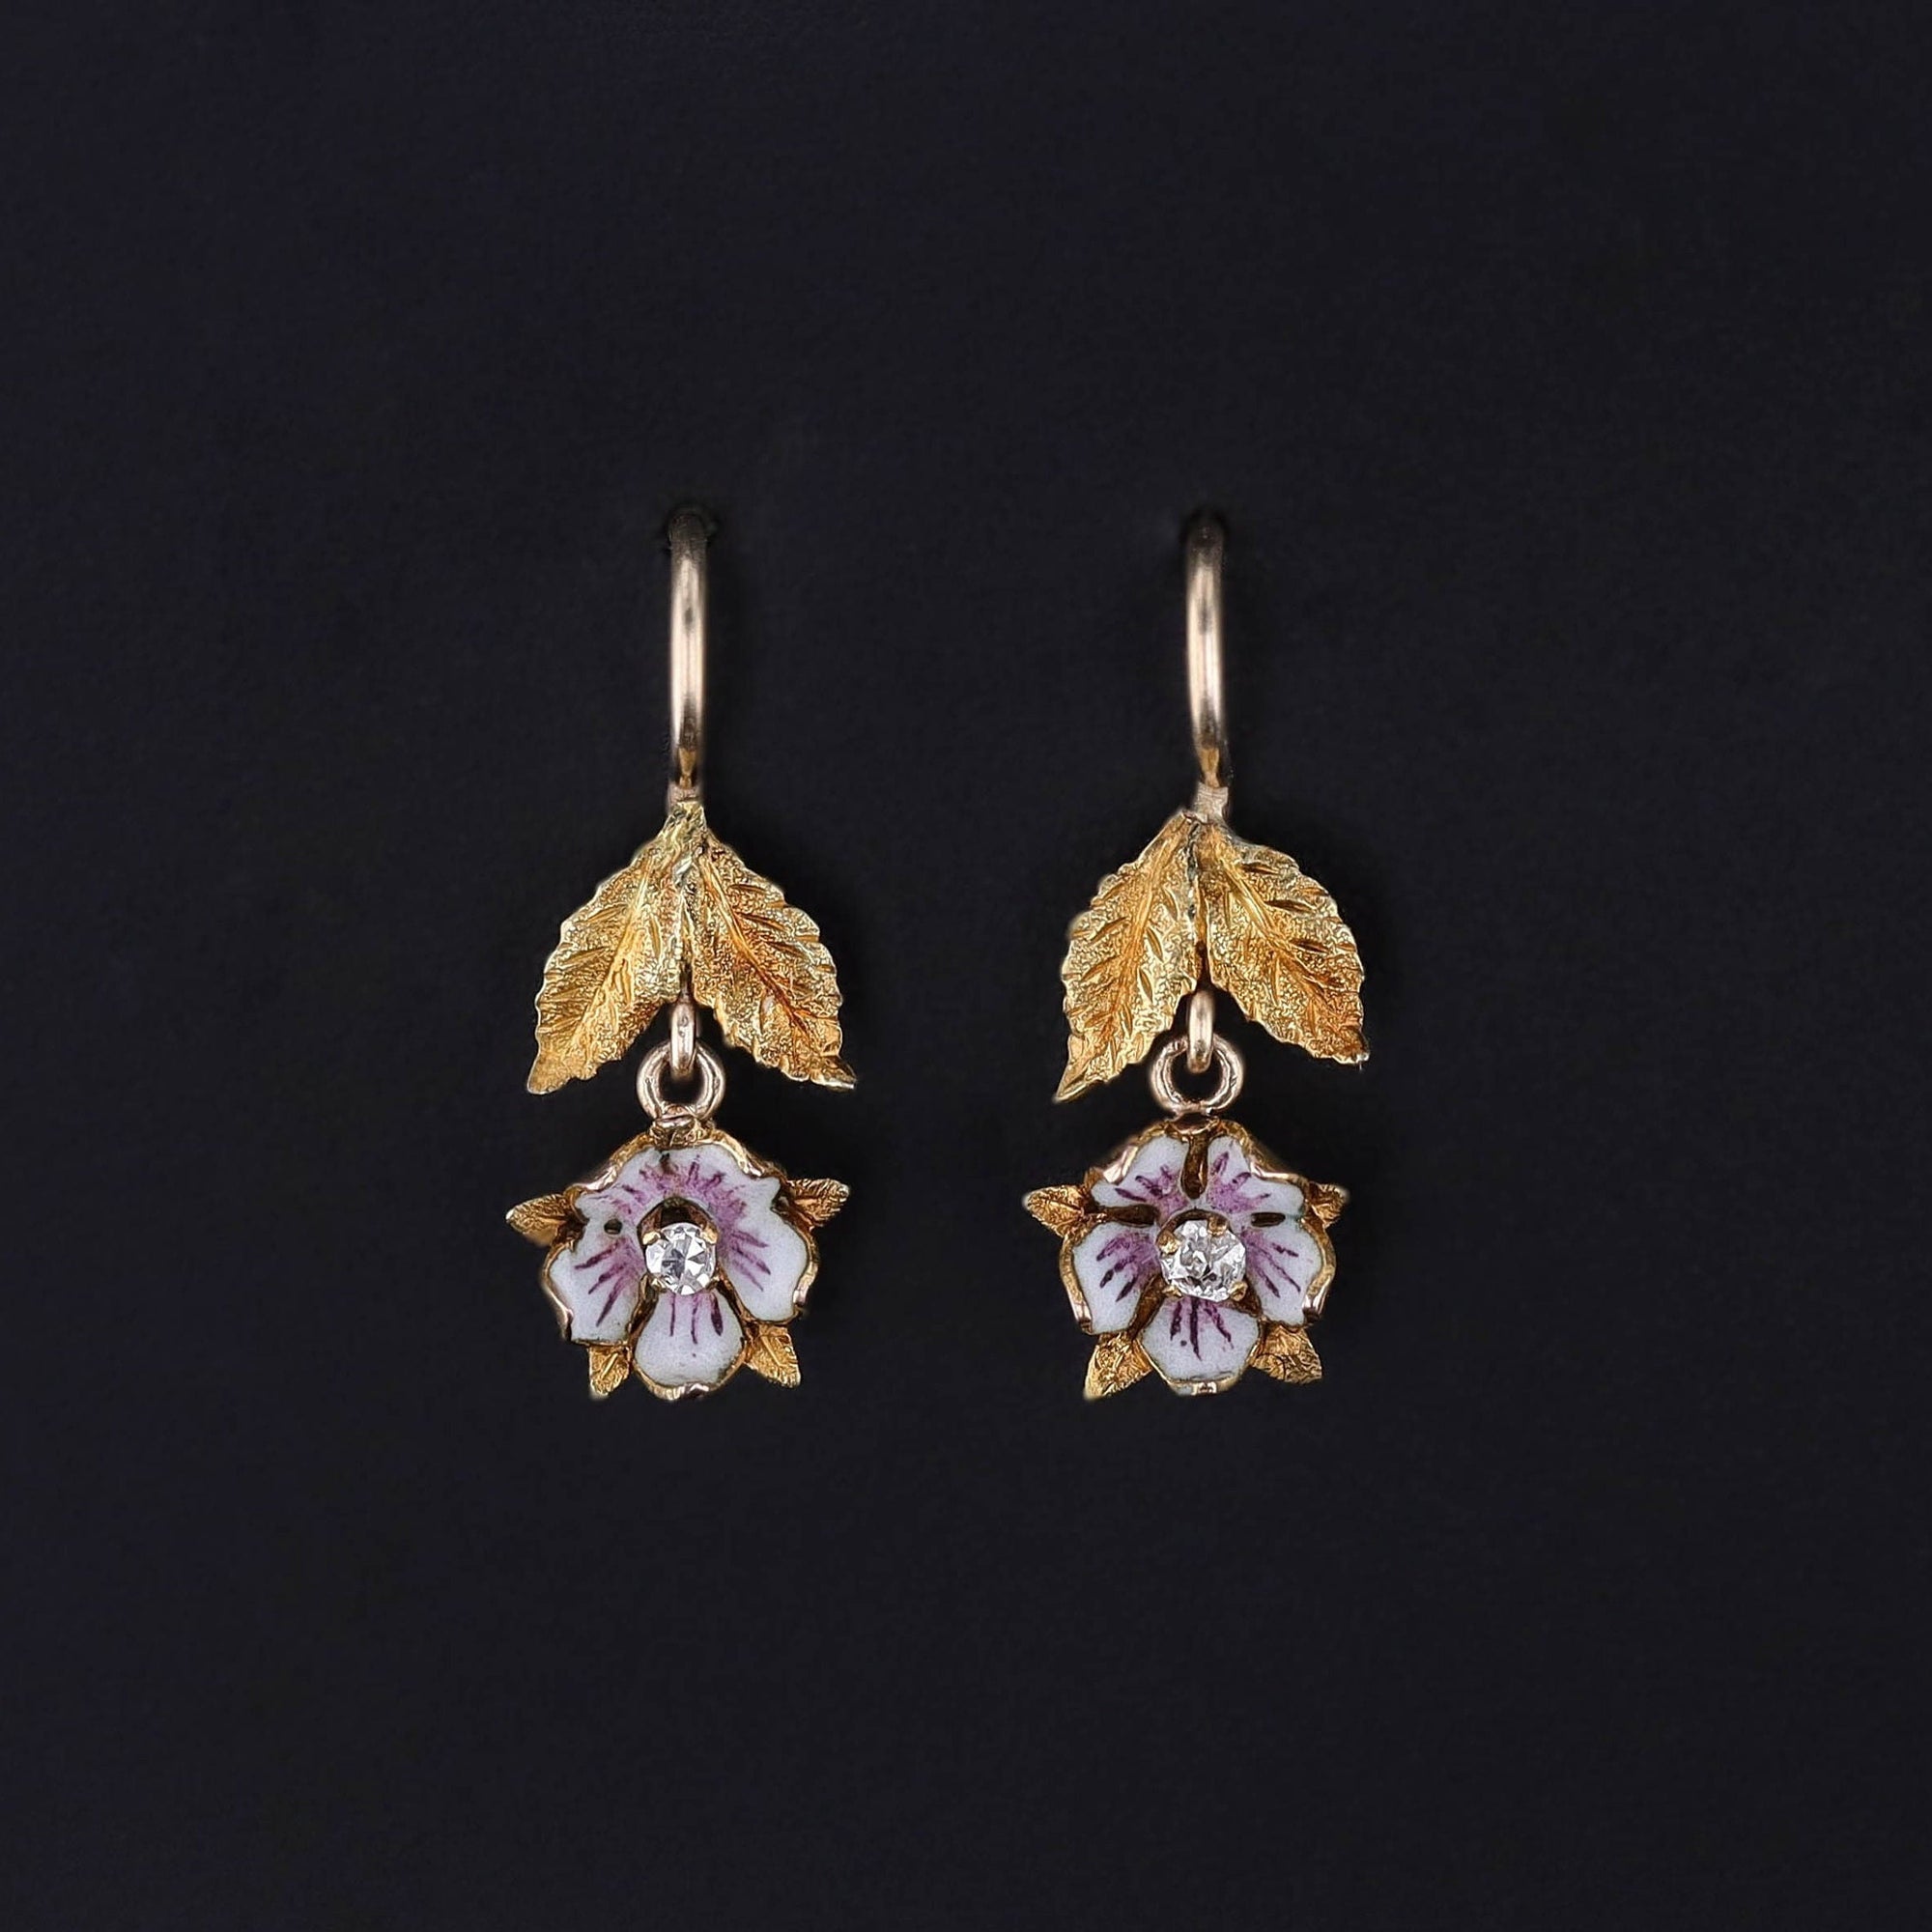 Antique Enamel Flower Earrings of 14k Gold